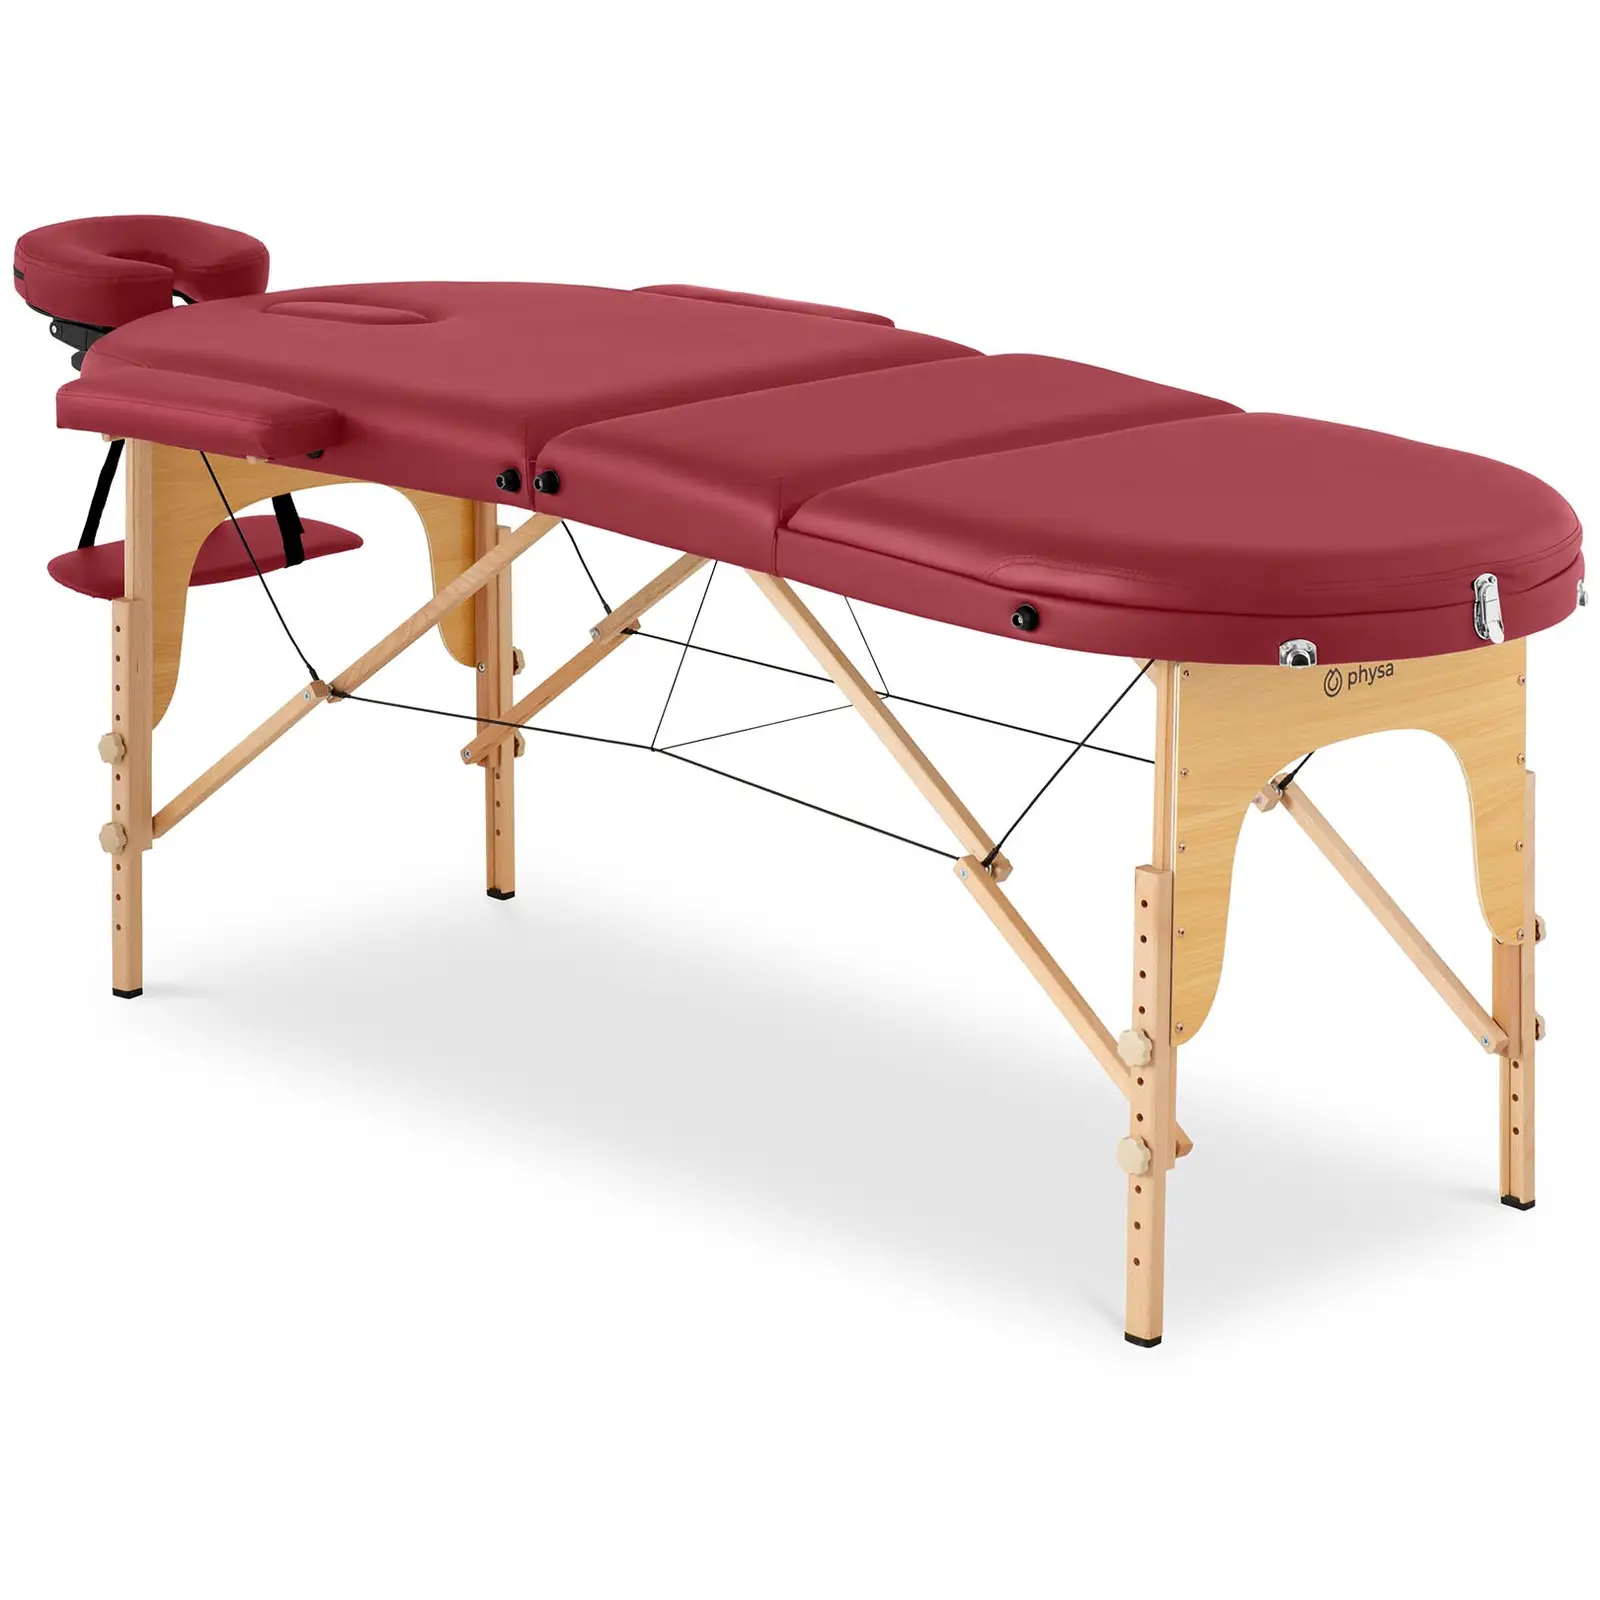 Folding Massage Table - 185-211 x 70-88 x 63-85  cm - 227 kg - Red